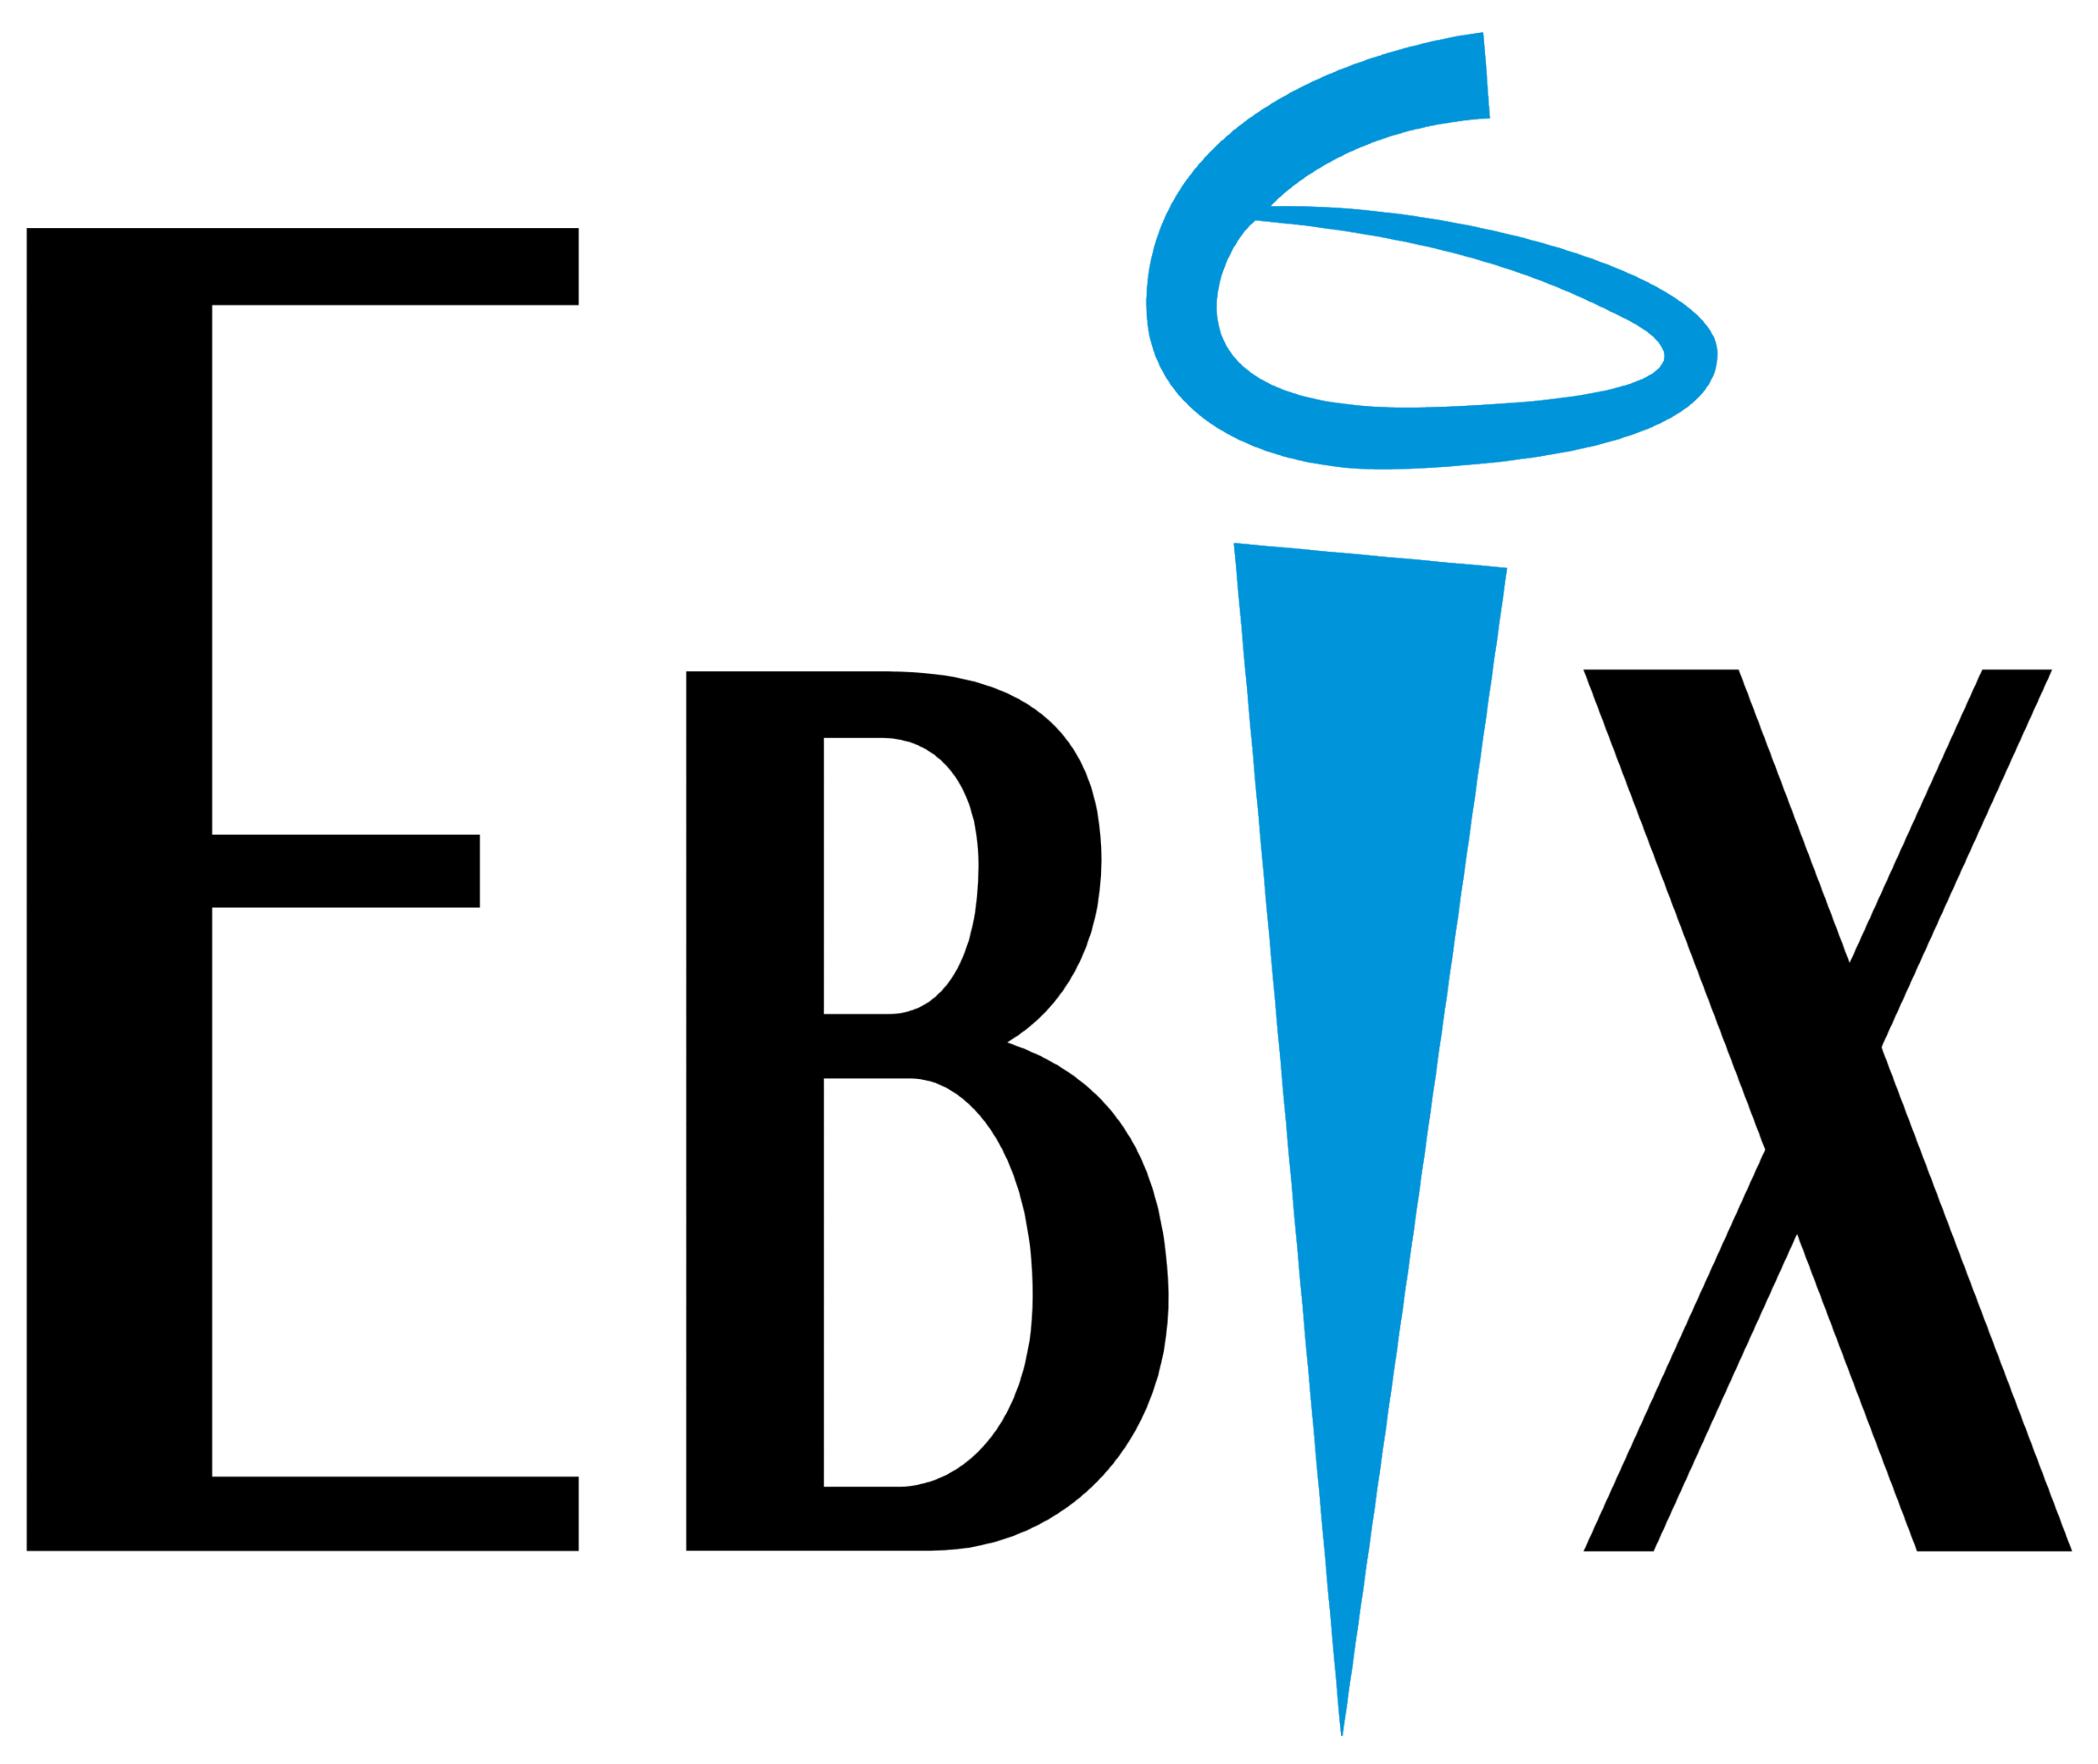 Ebix logo, logotype